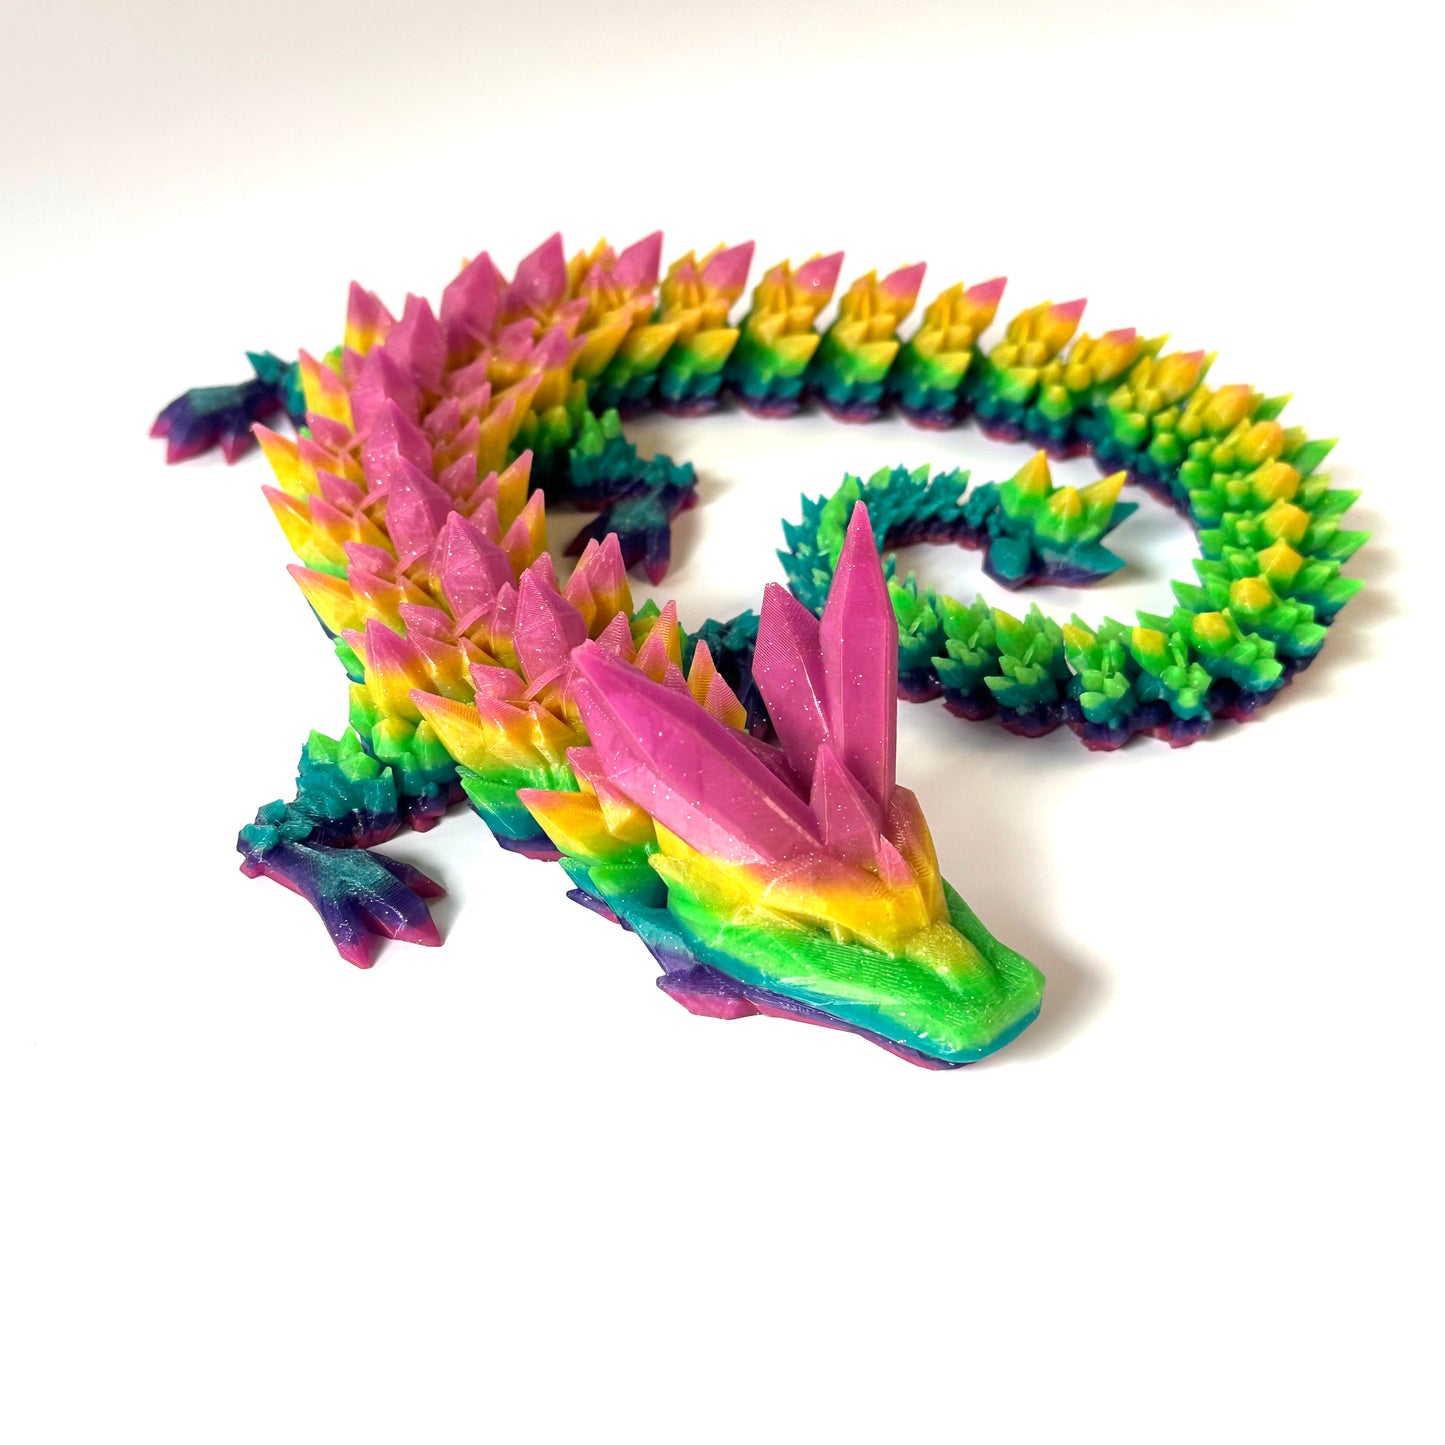 Large Crystal Dragons - 3D Printed Articulating